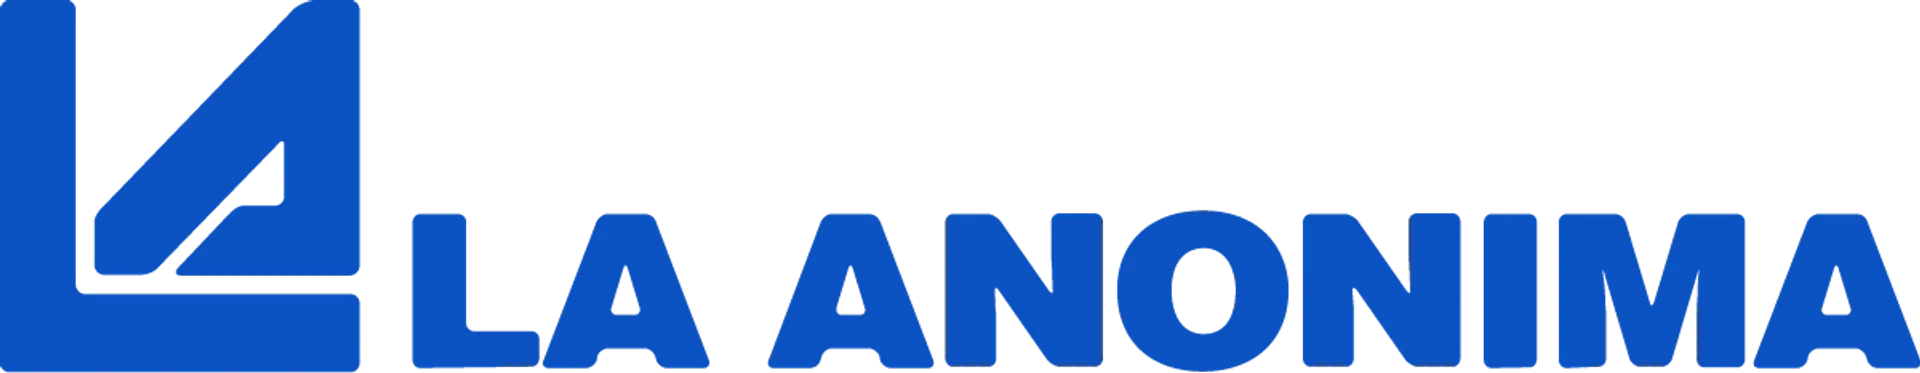 LA ANÓNIMA logo